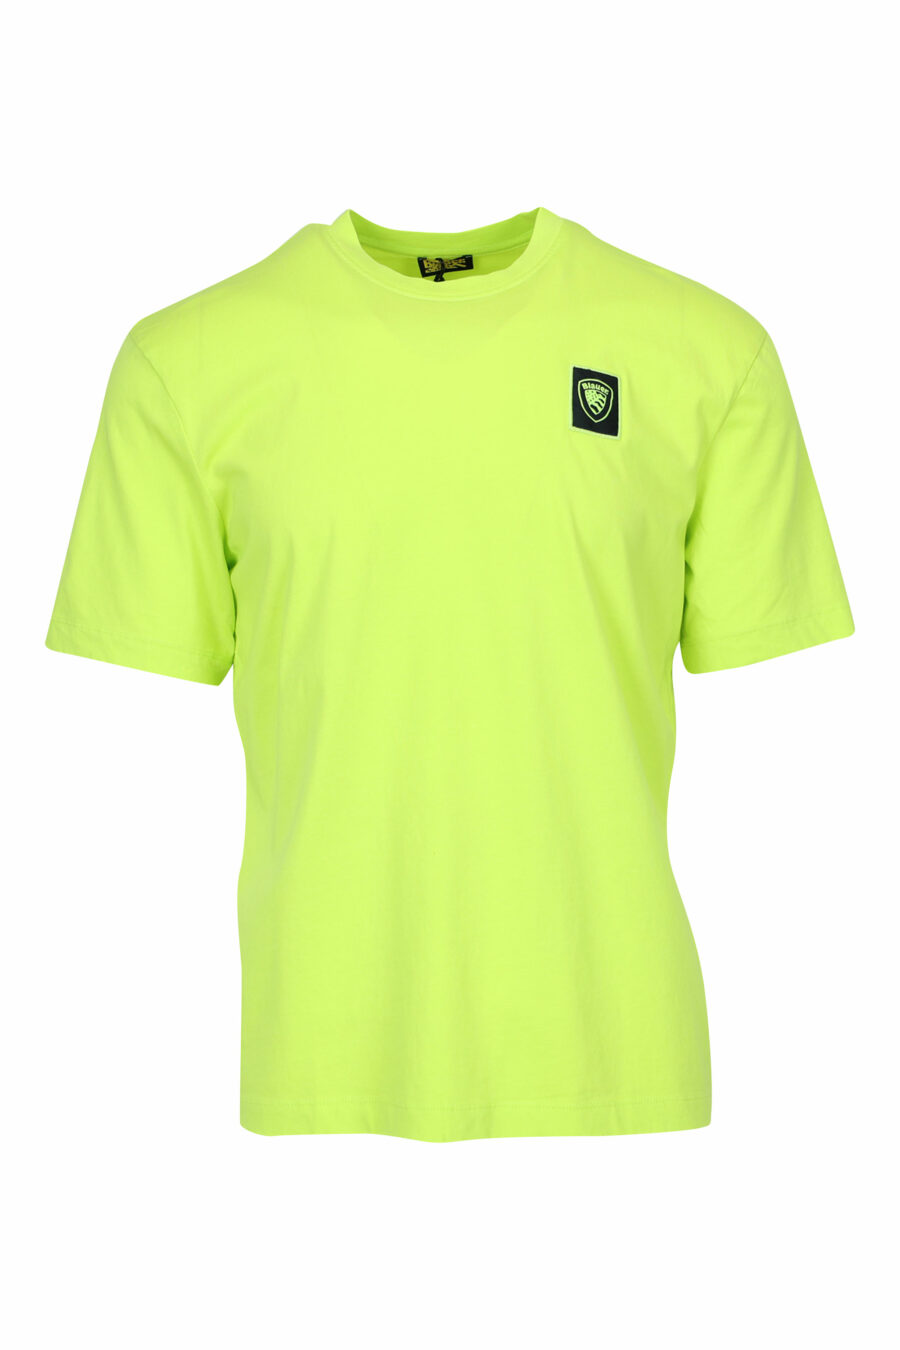 Camiseta amarilla con minilogo escudo - 8058610829339